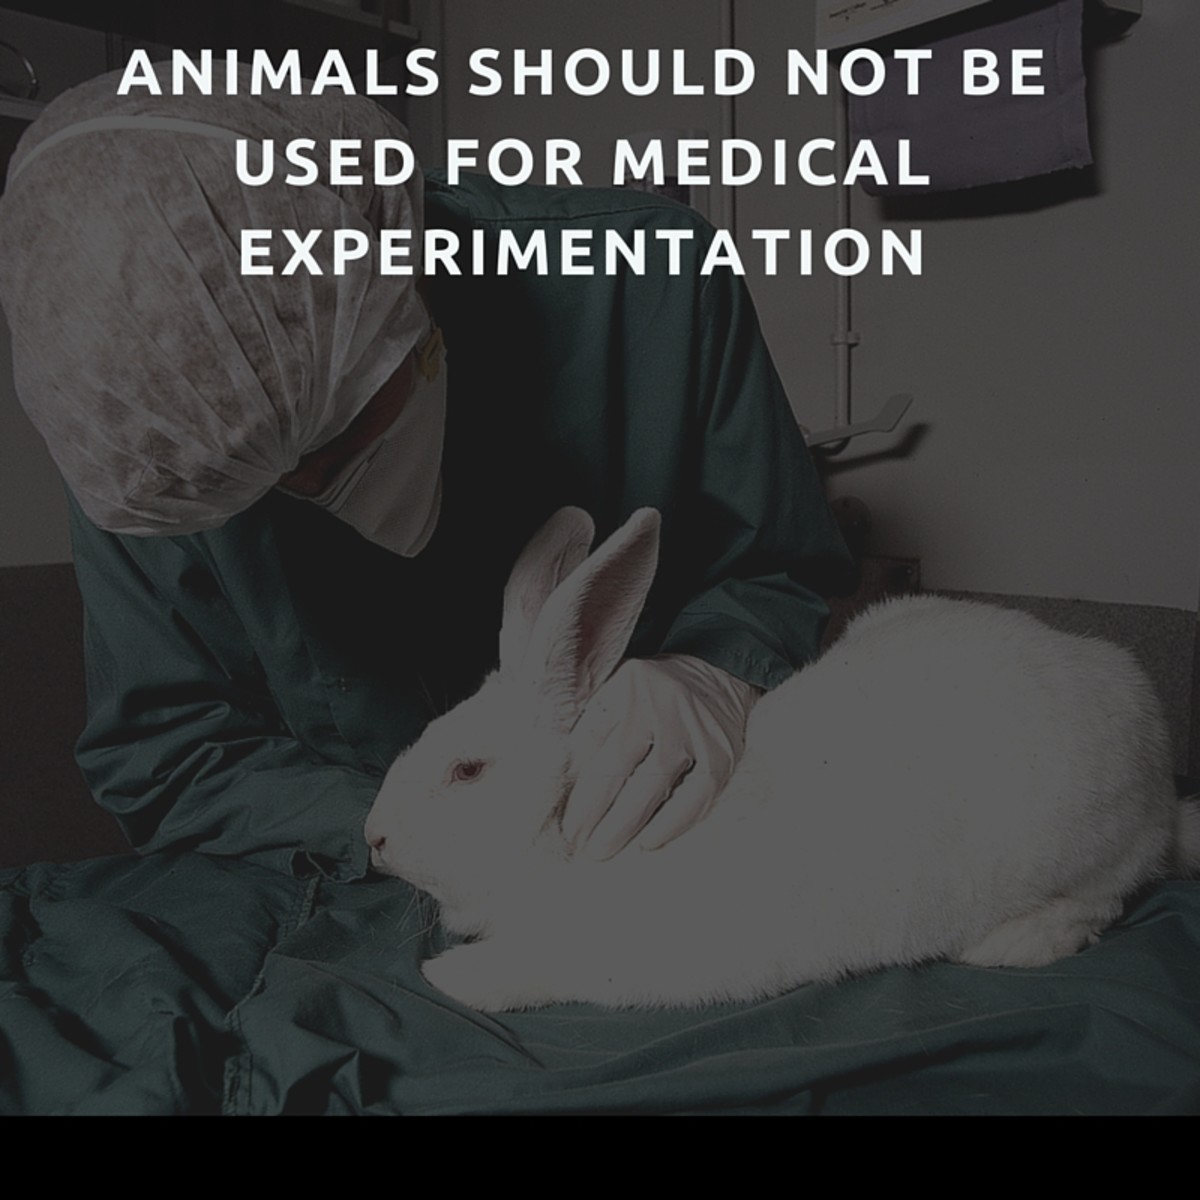 animal-testing-medical-experimentation